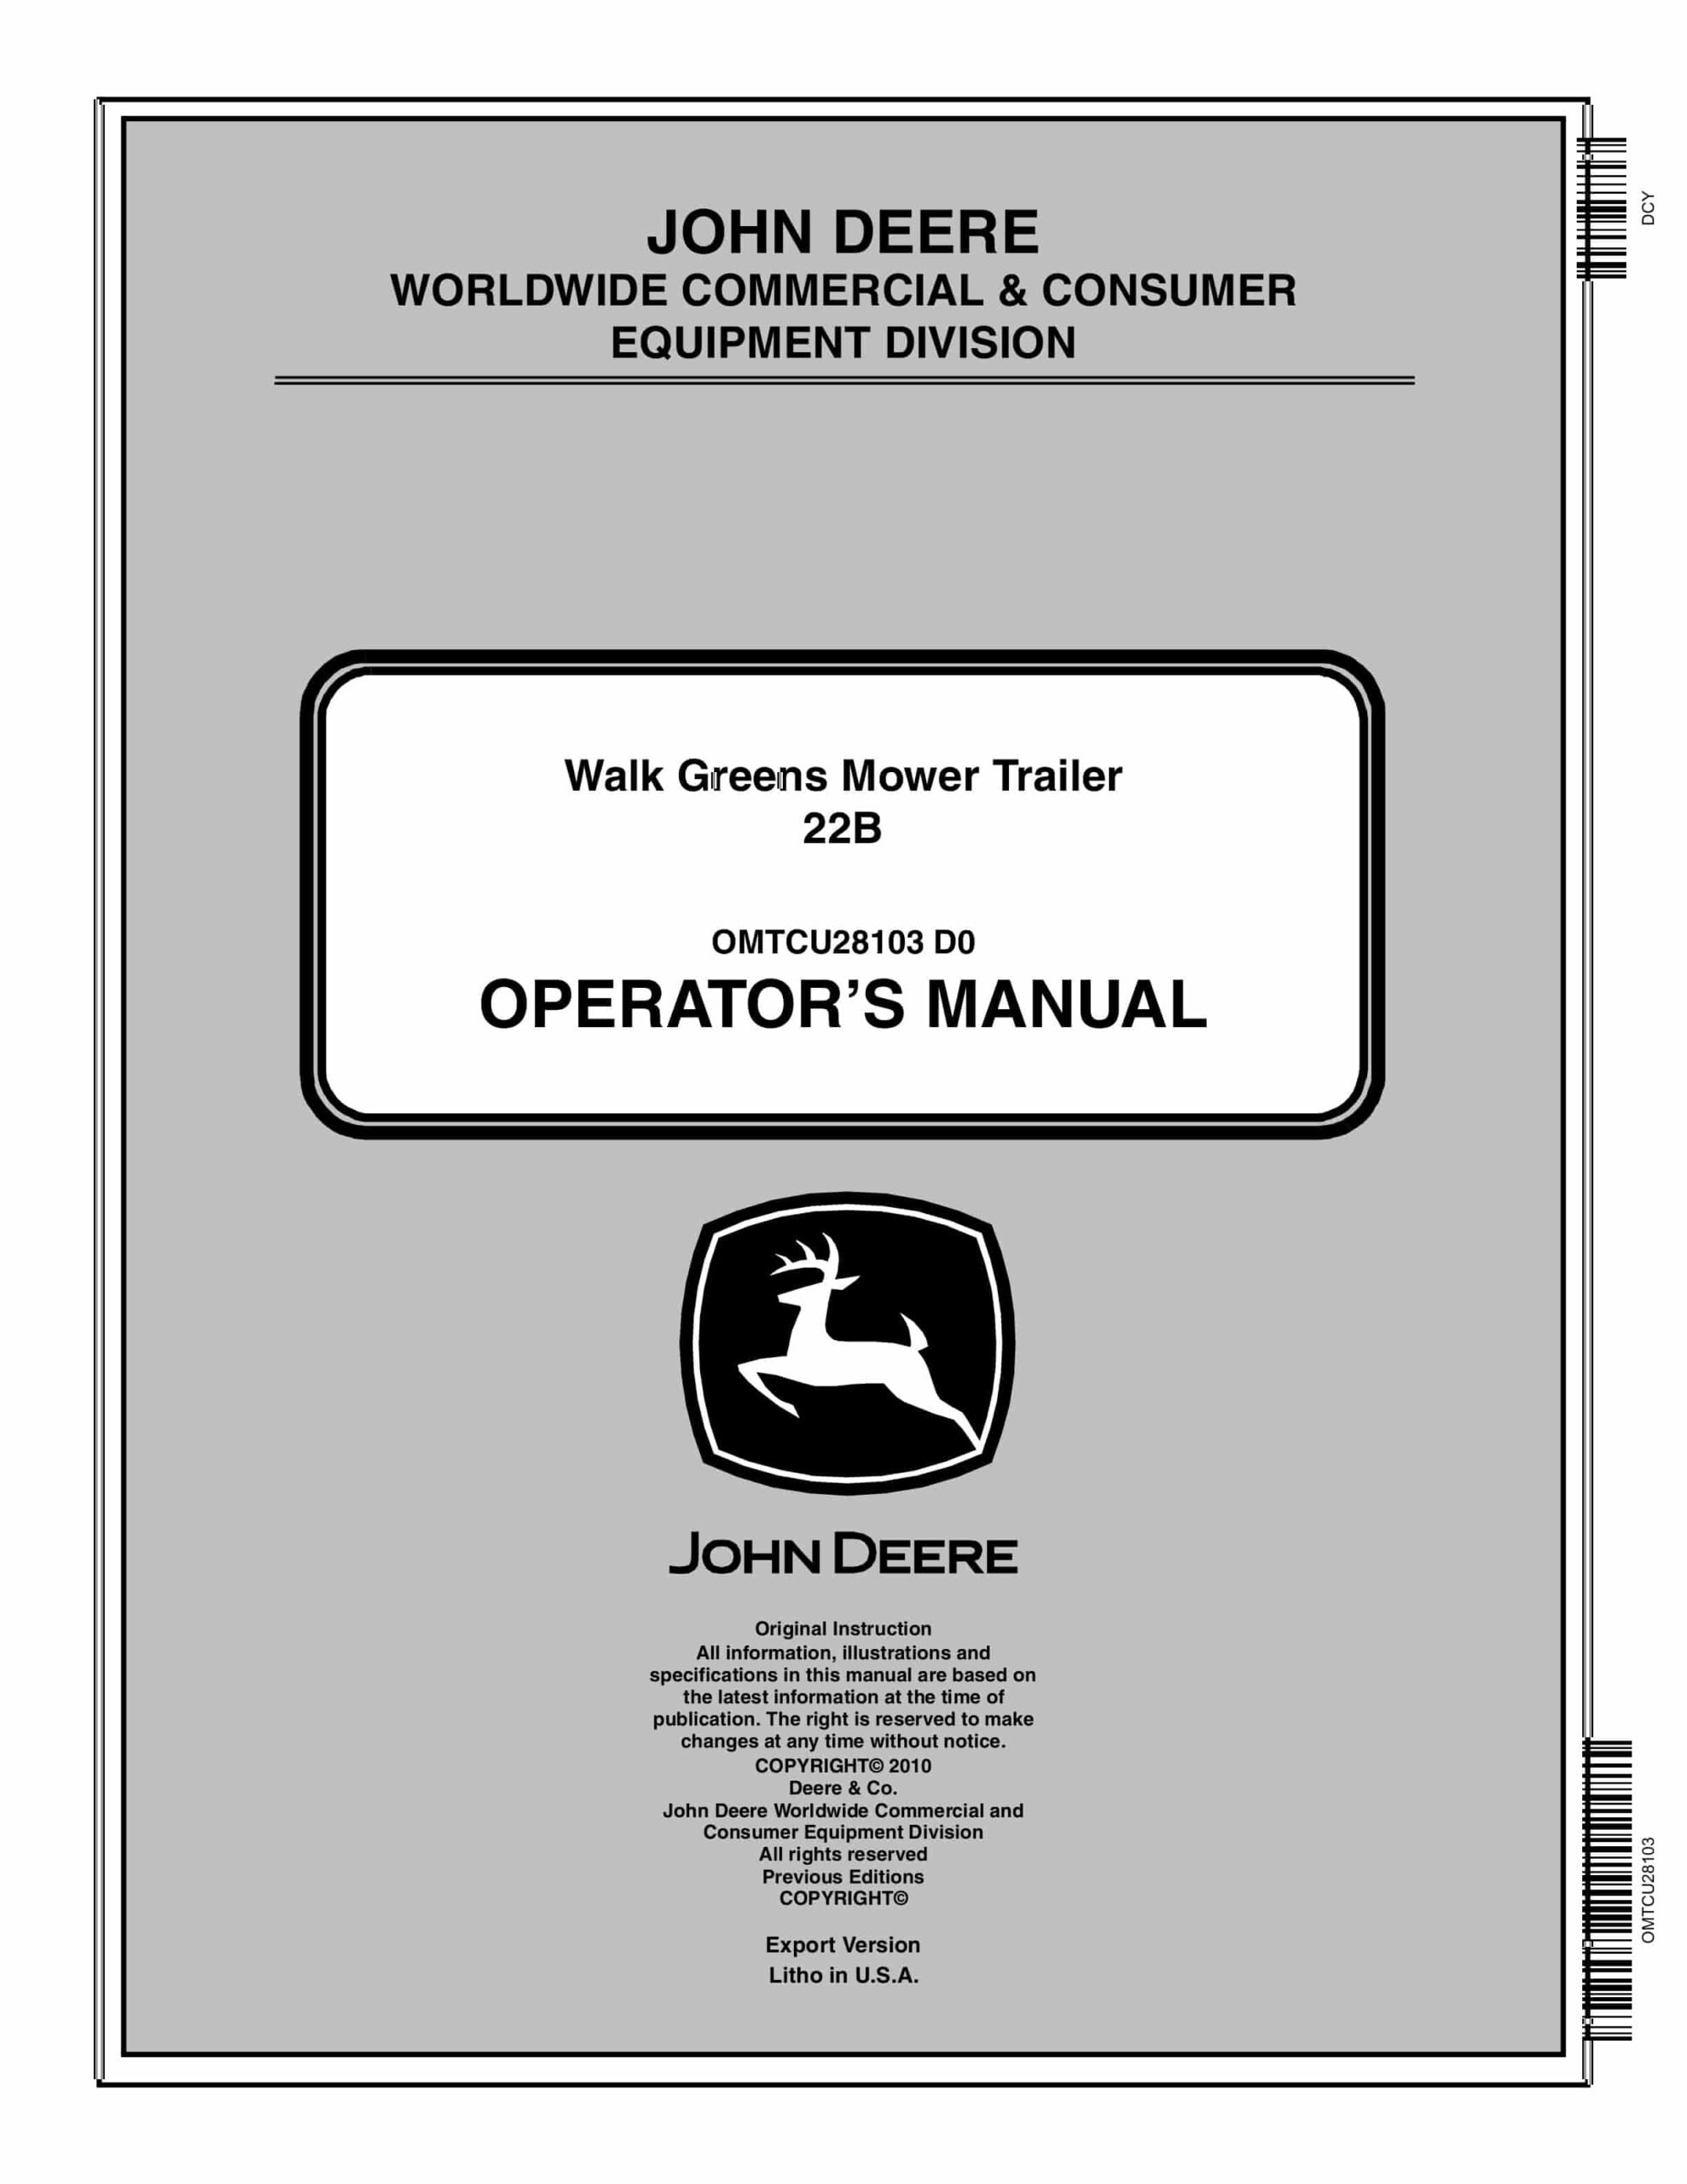 John Deere 22B Walk-Behind Greensmower Trailer Operator Manual OMTCU28103-1